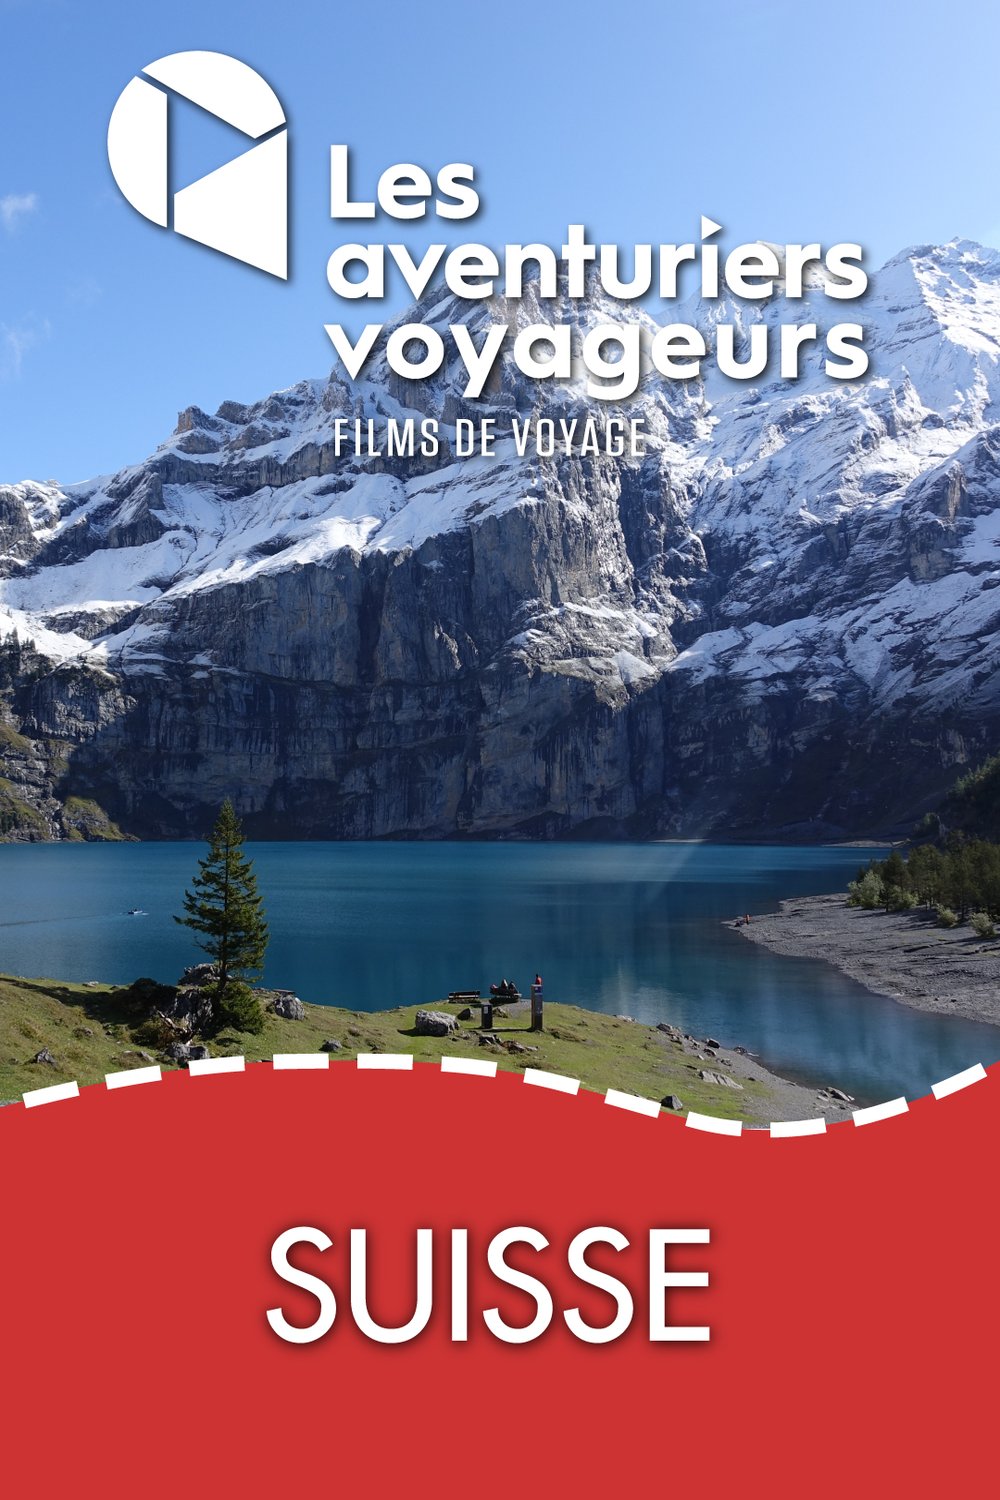 Poster of the movie Les aventuriers voyageurs: Suisse envoûtante